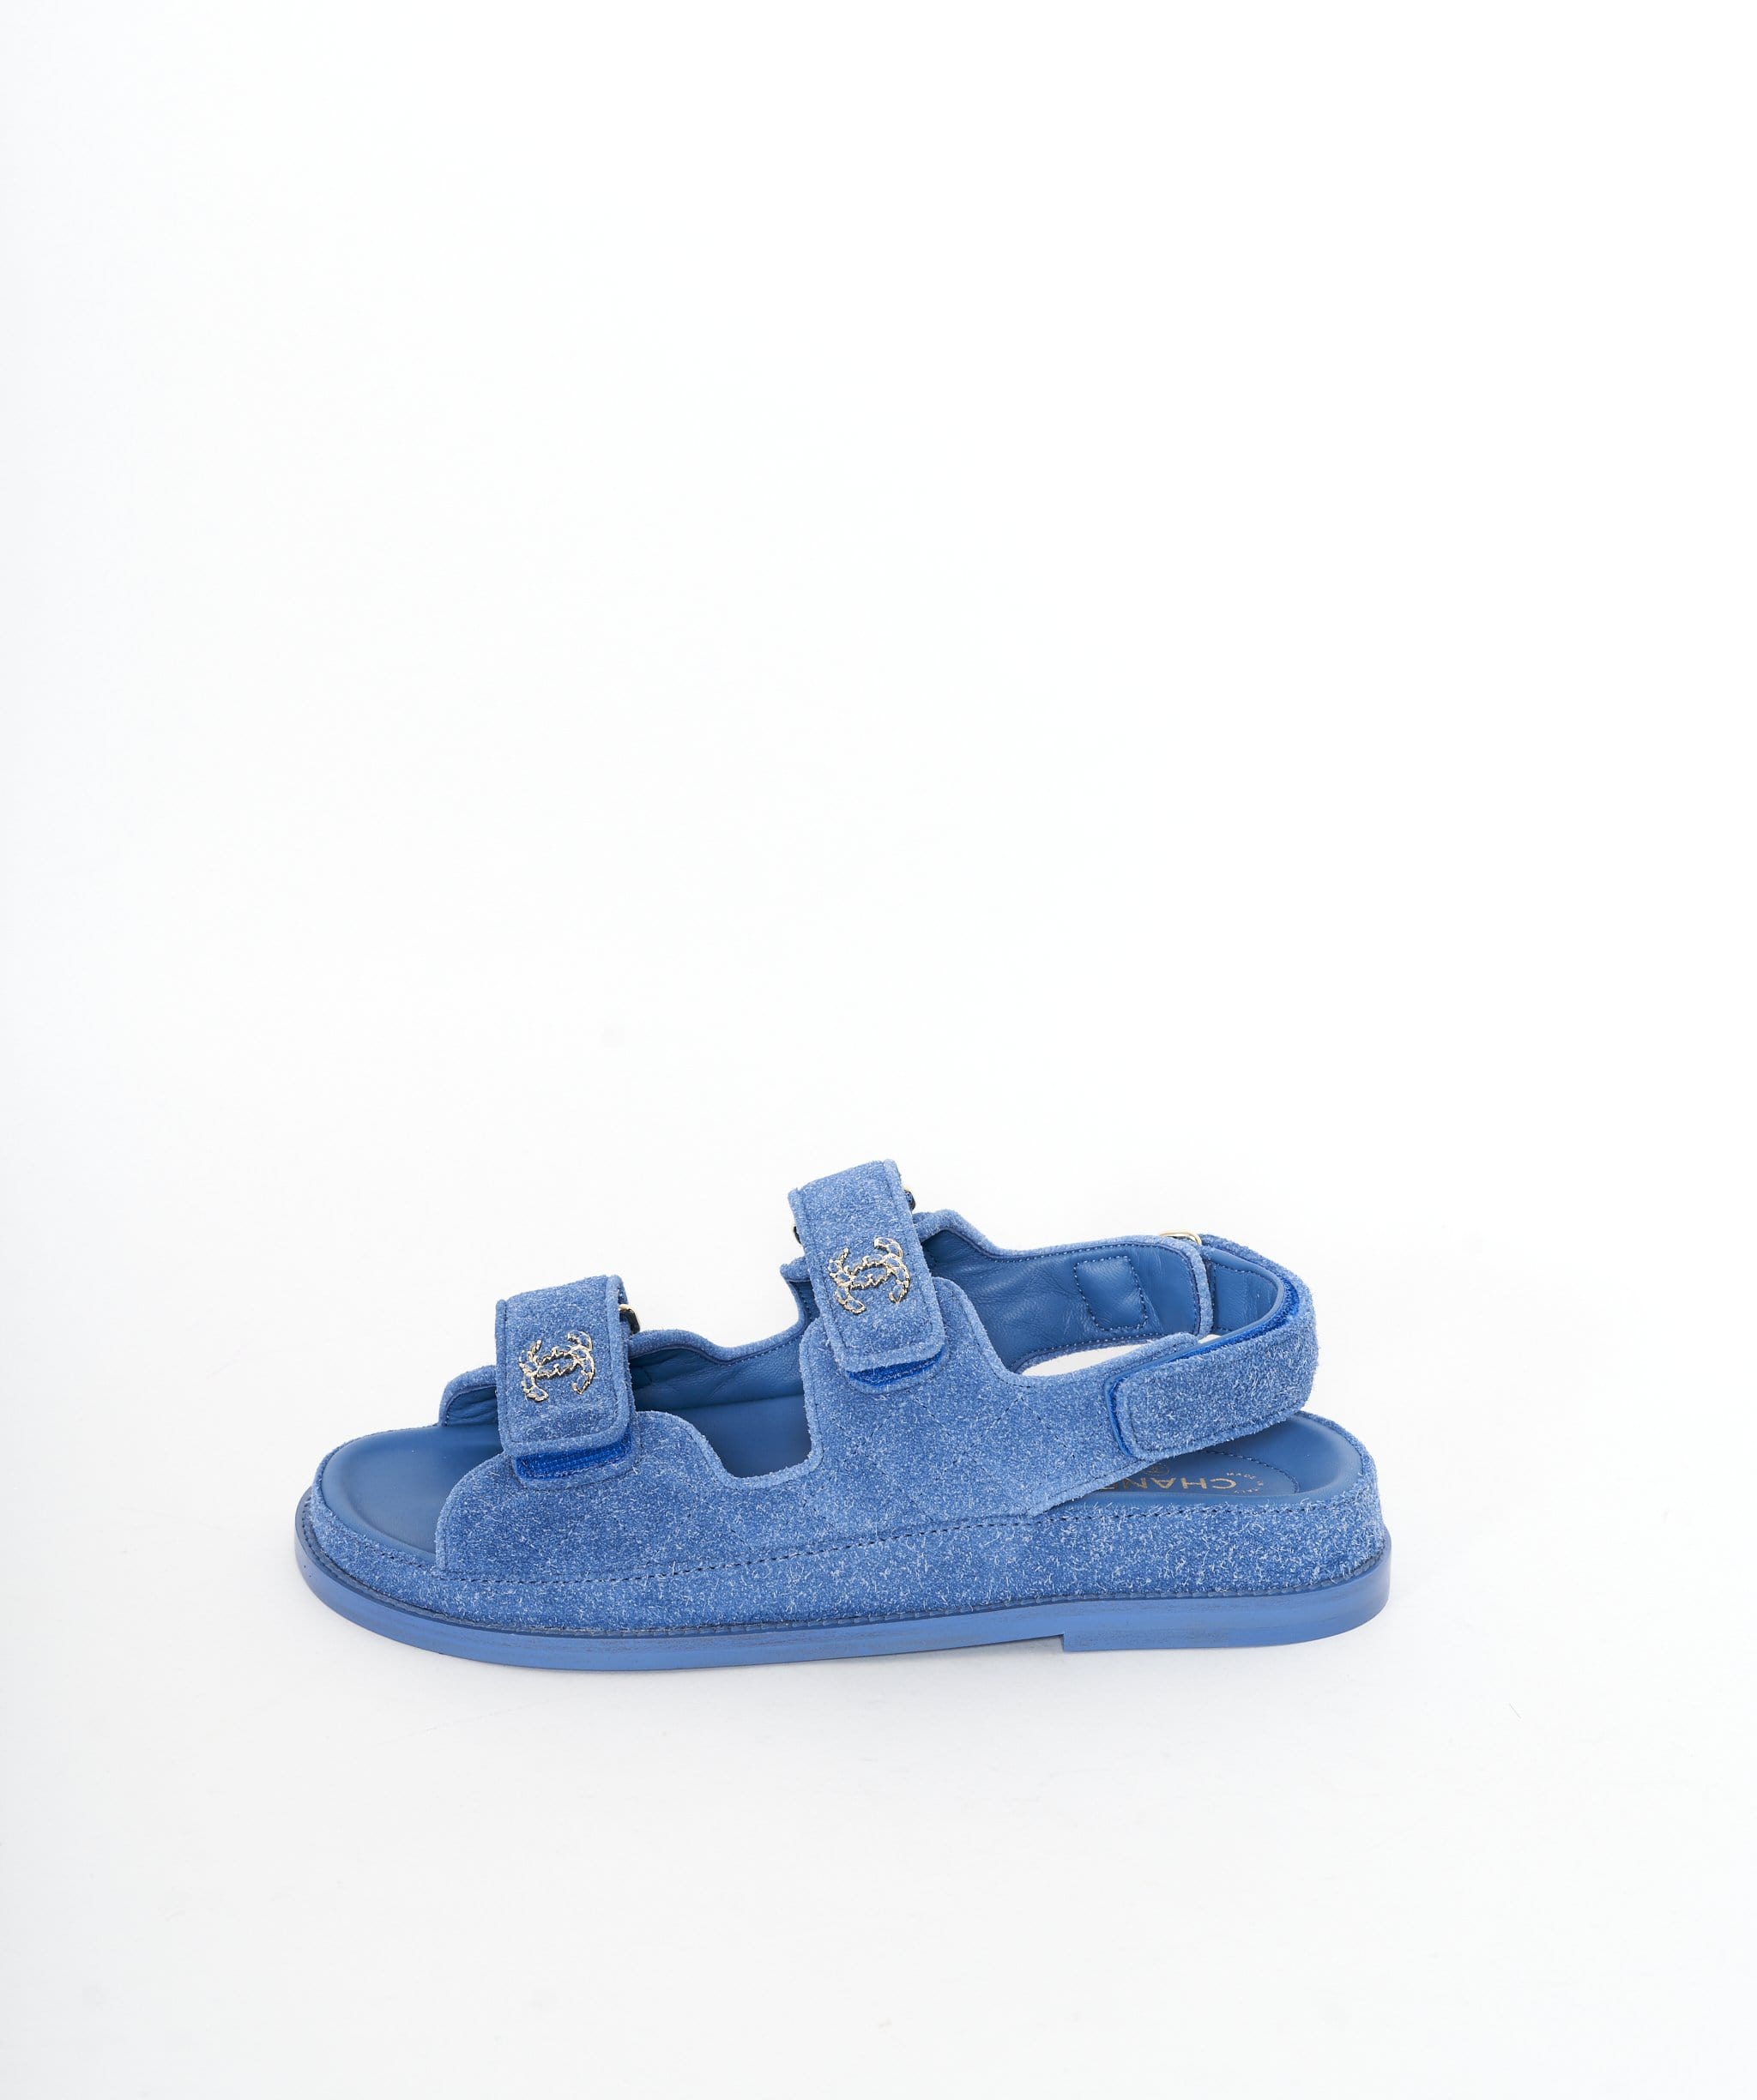 Dad sandals cloth sandals Chanel Blue size 36 EU in Cloth - 31802249